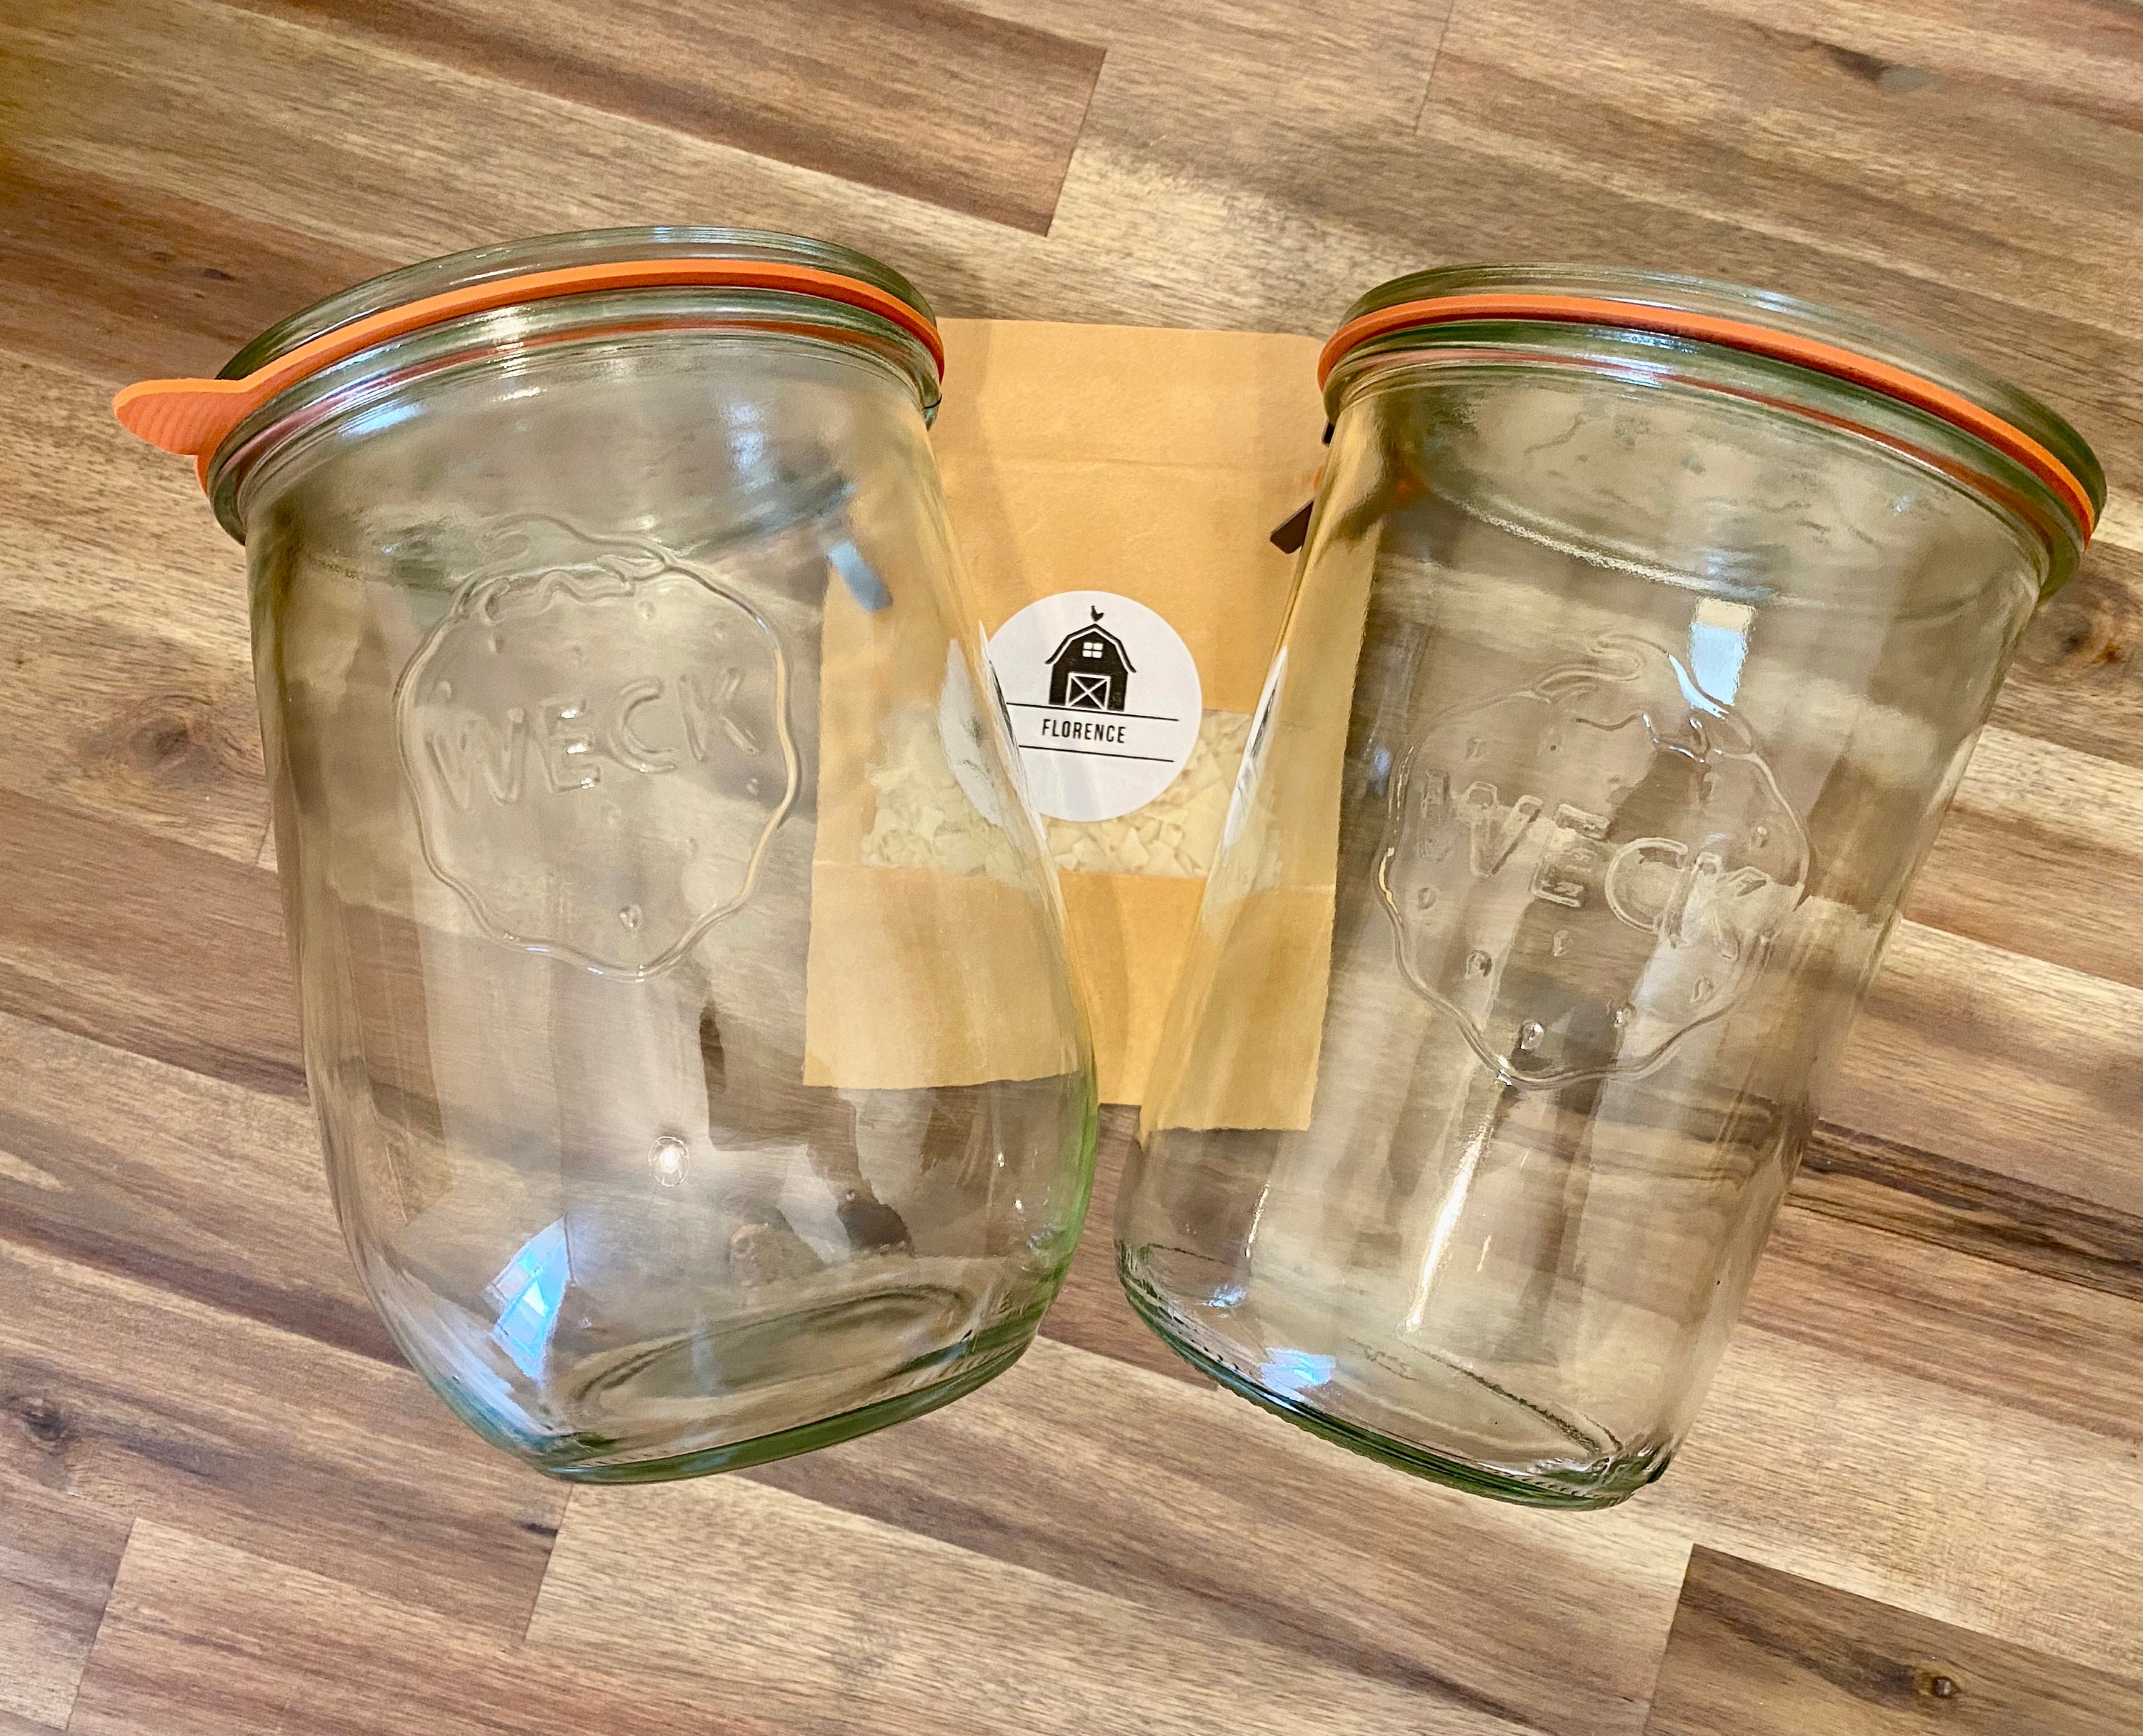  Full Proof Baking Sourdough Starter Jars with Date Mark  Thermometer Tracker Notes Bands - 2-Pc 10oz Small Glass Jars for Sourdough  w/Lid - Sourdough Bread Starter Feeding Gift Set- Home Baking